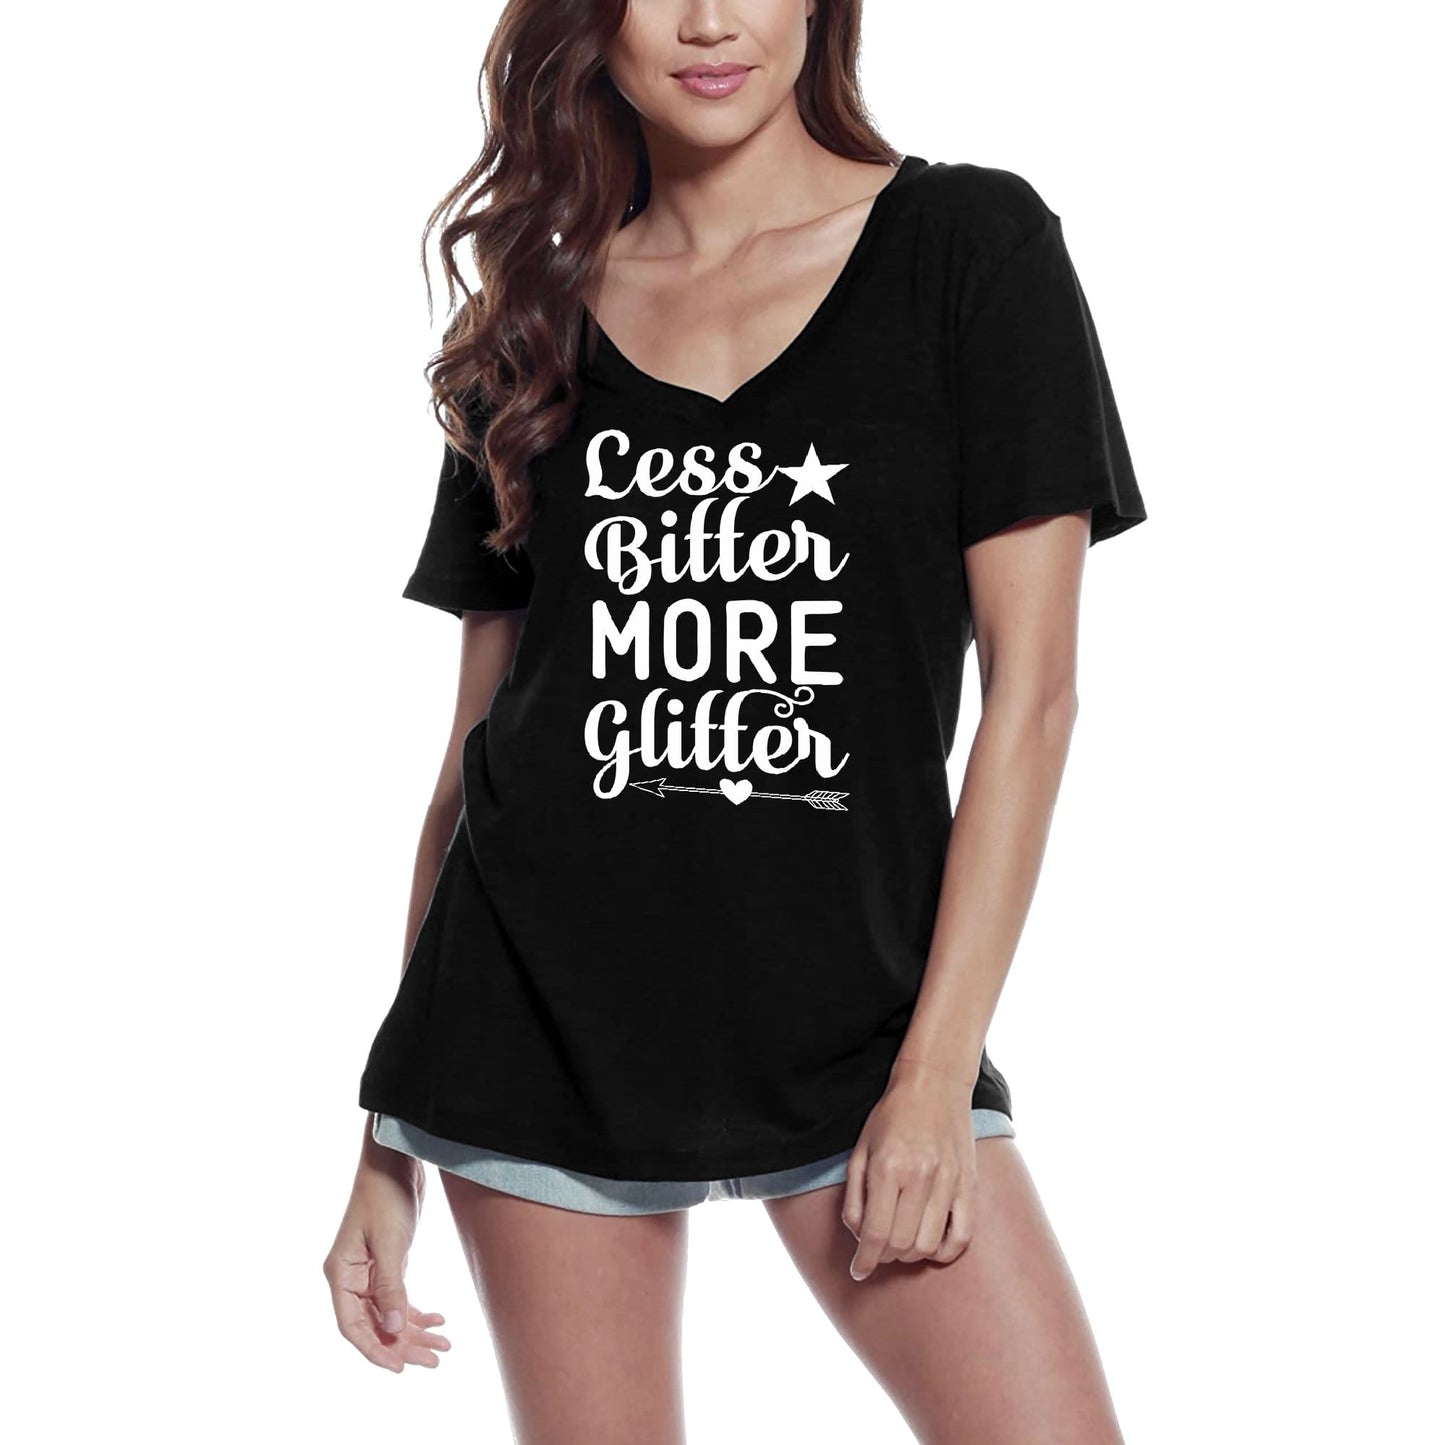 ULTRABASIC Women's T-Shirt Less Bitter More Glitter - Short Sleeve Tee Shirt Tops